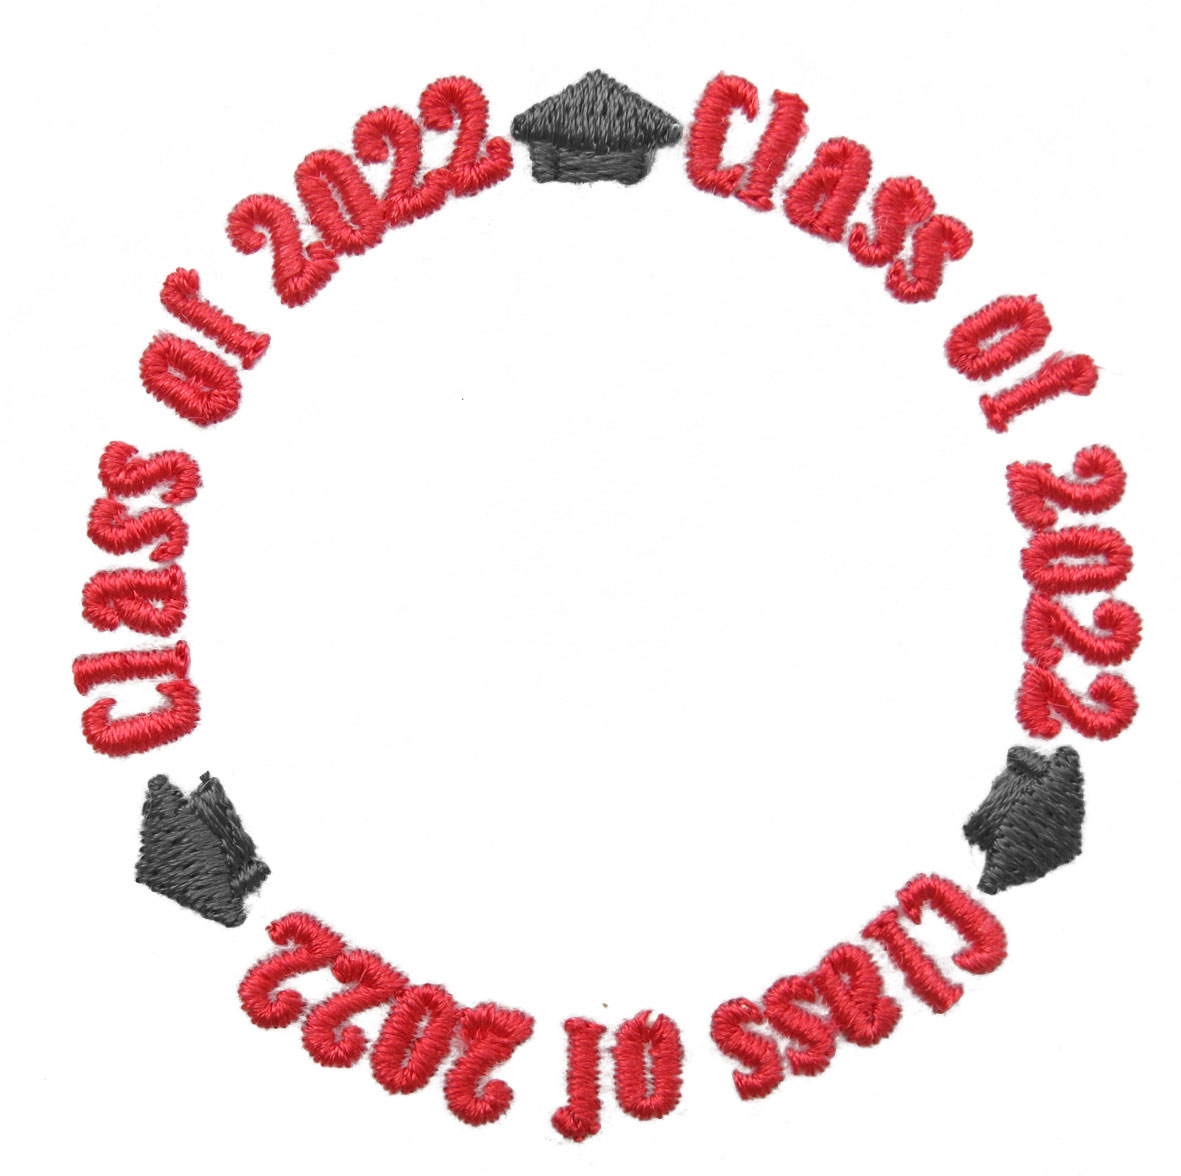 Class of 2021 2022 Monogram Frame Embroidery Design